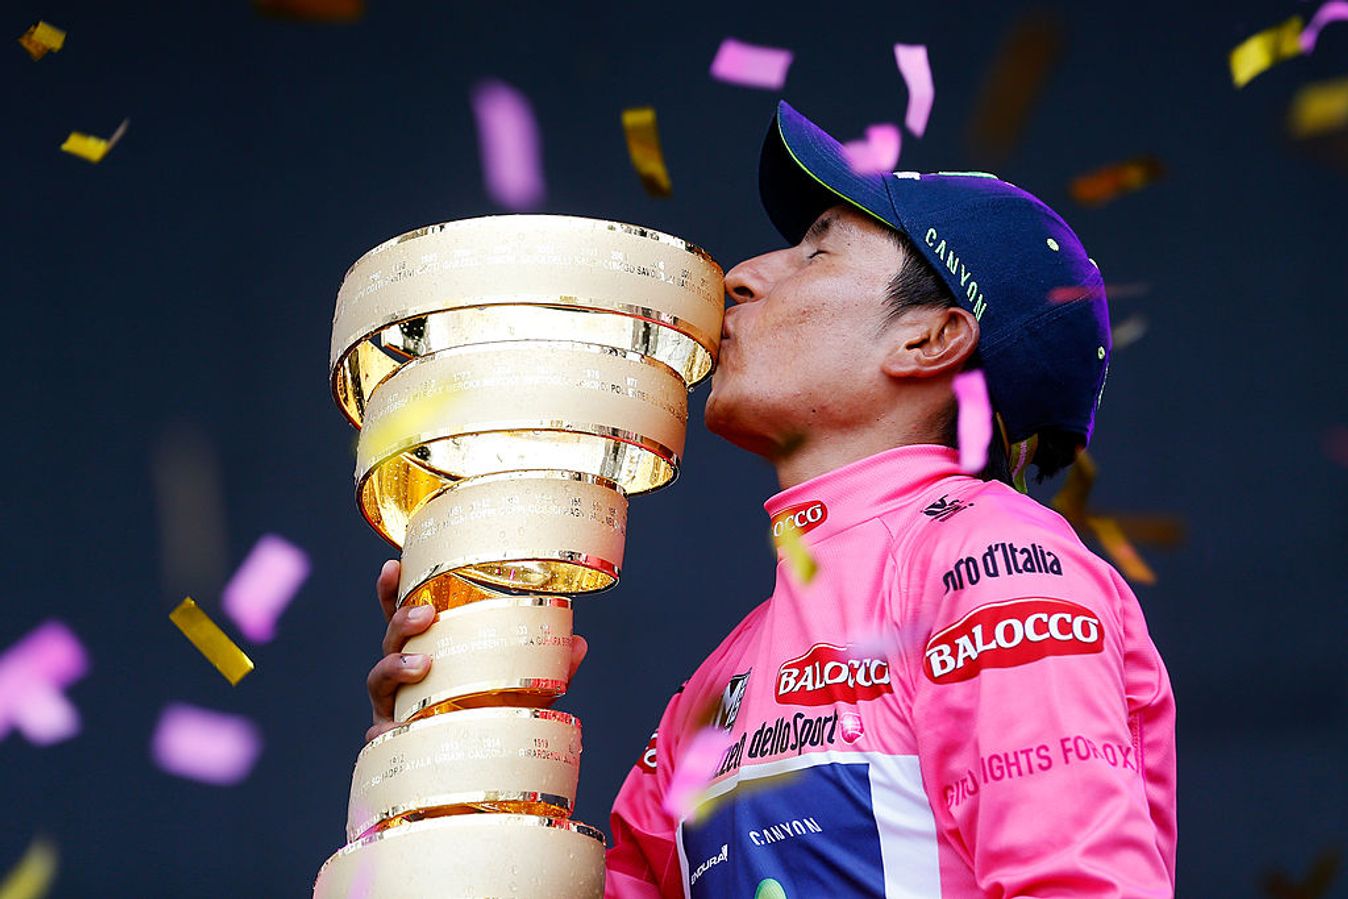 Nairo Quintana lifted the iconic Giro trophy in 2014